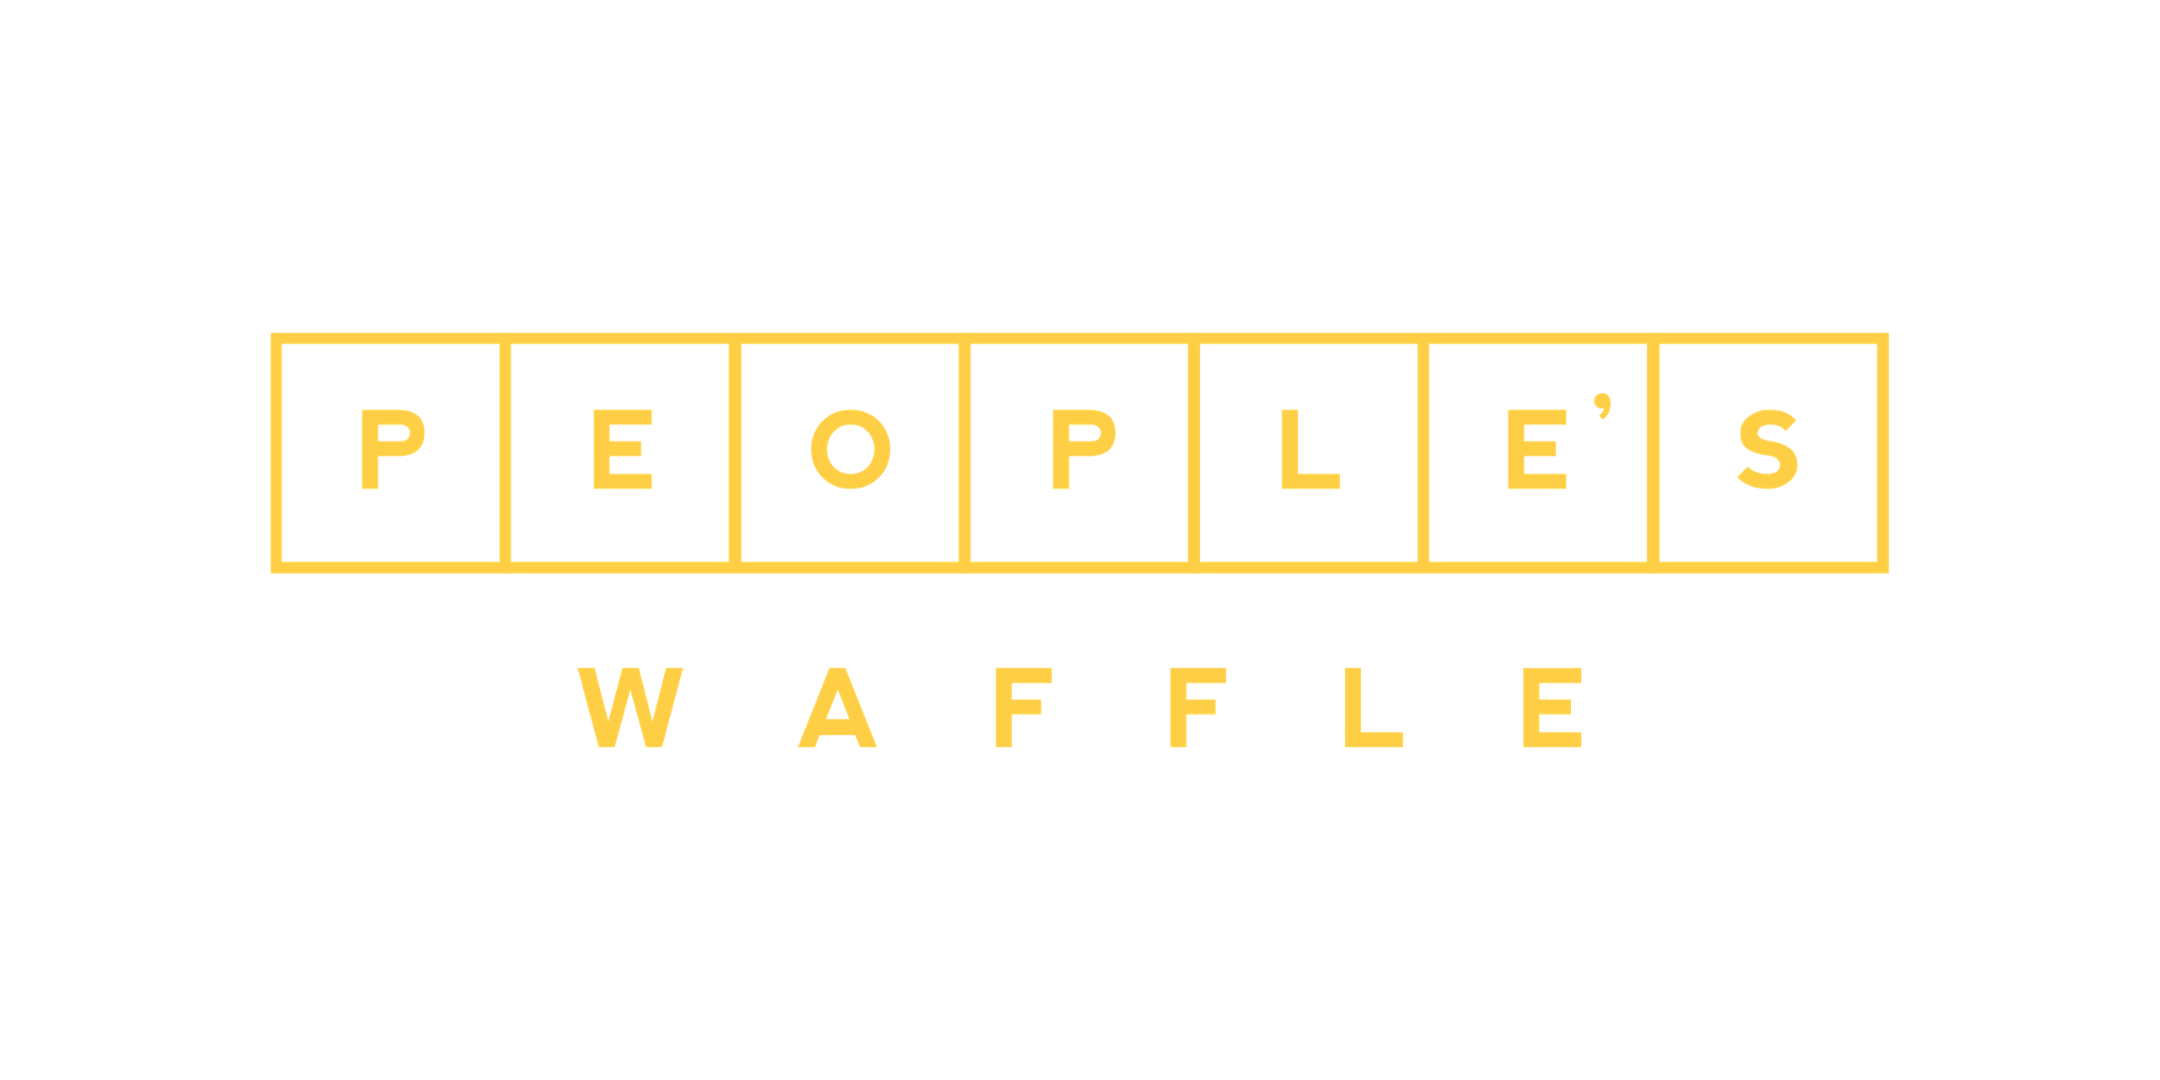 People’s Waffles